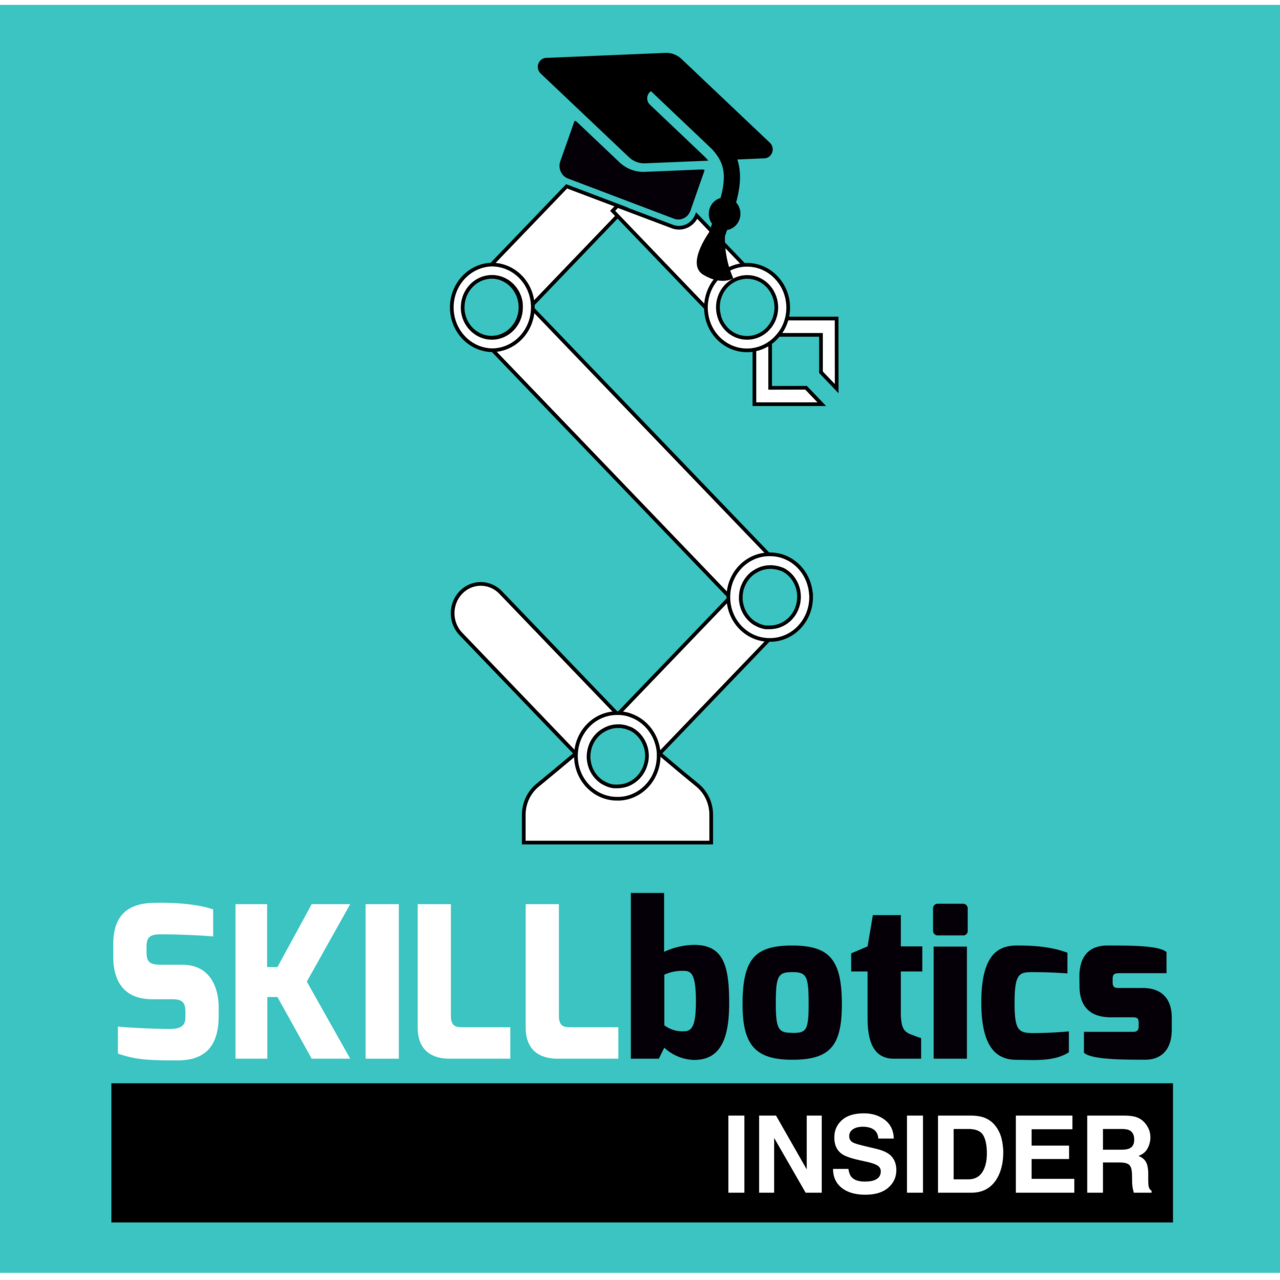 Skillbotics INSIDER